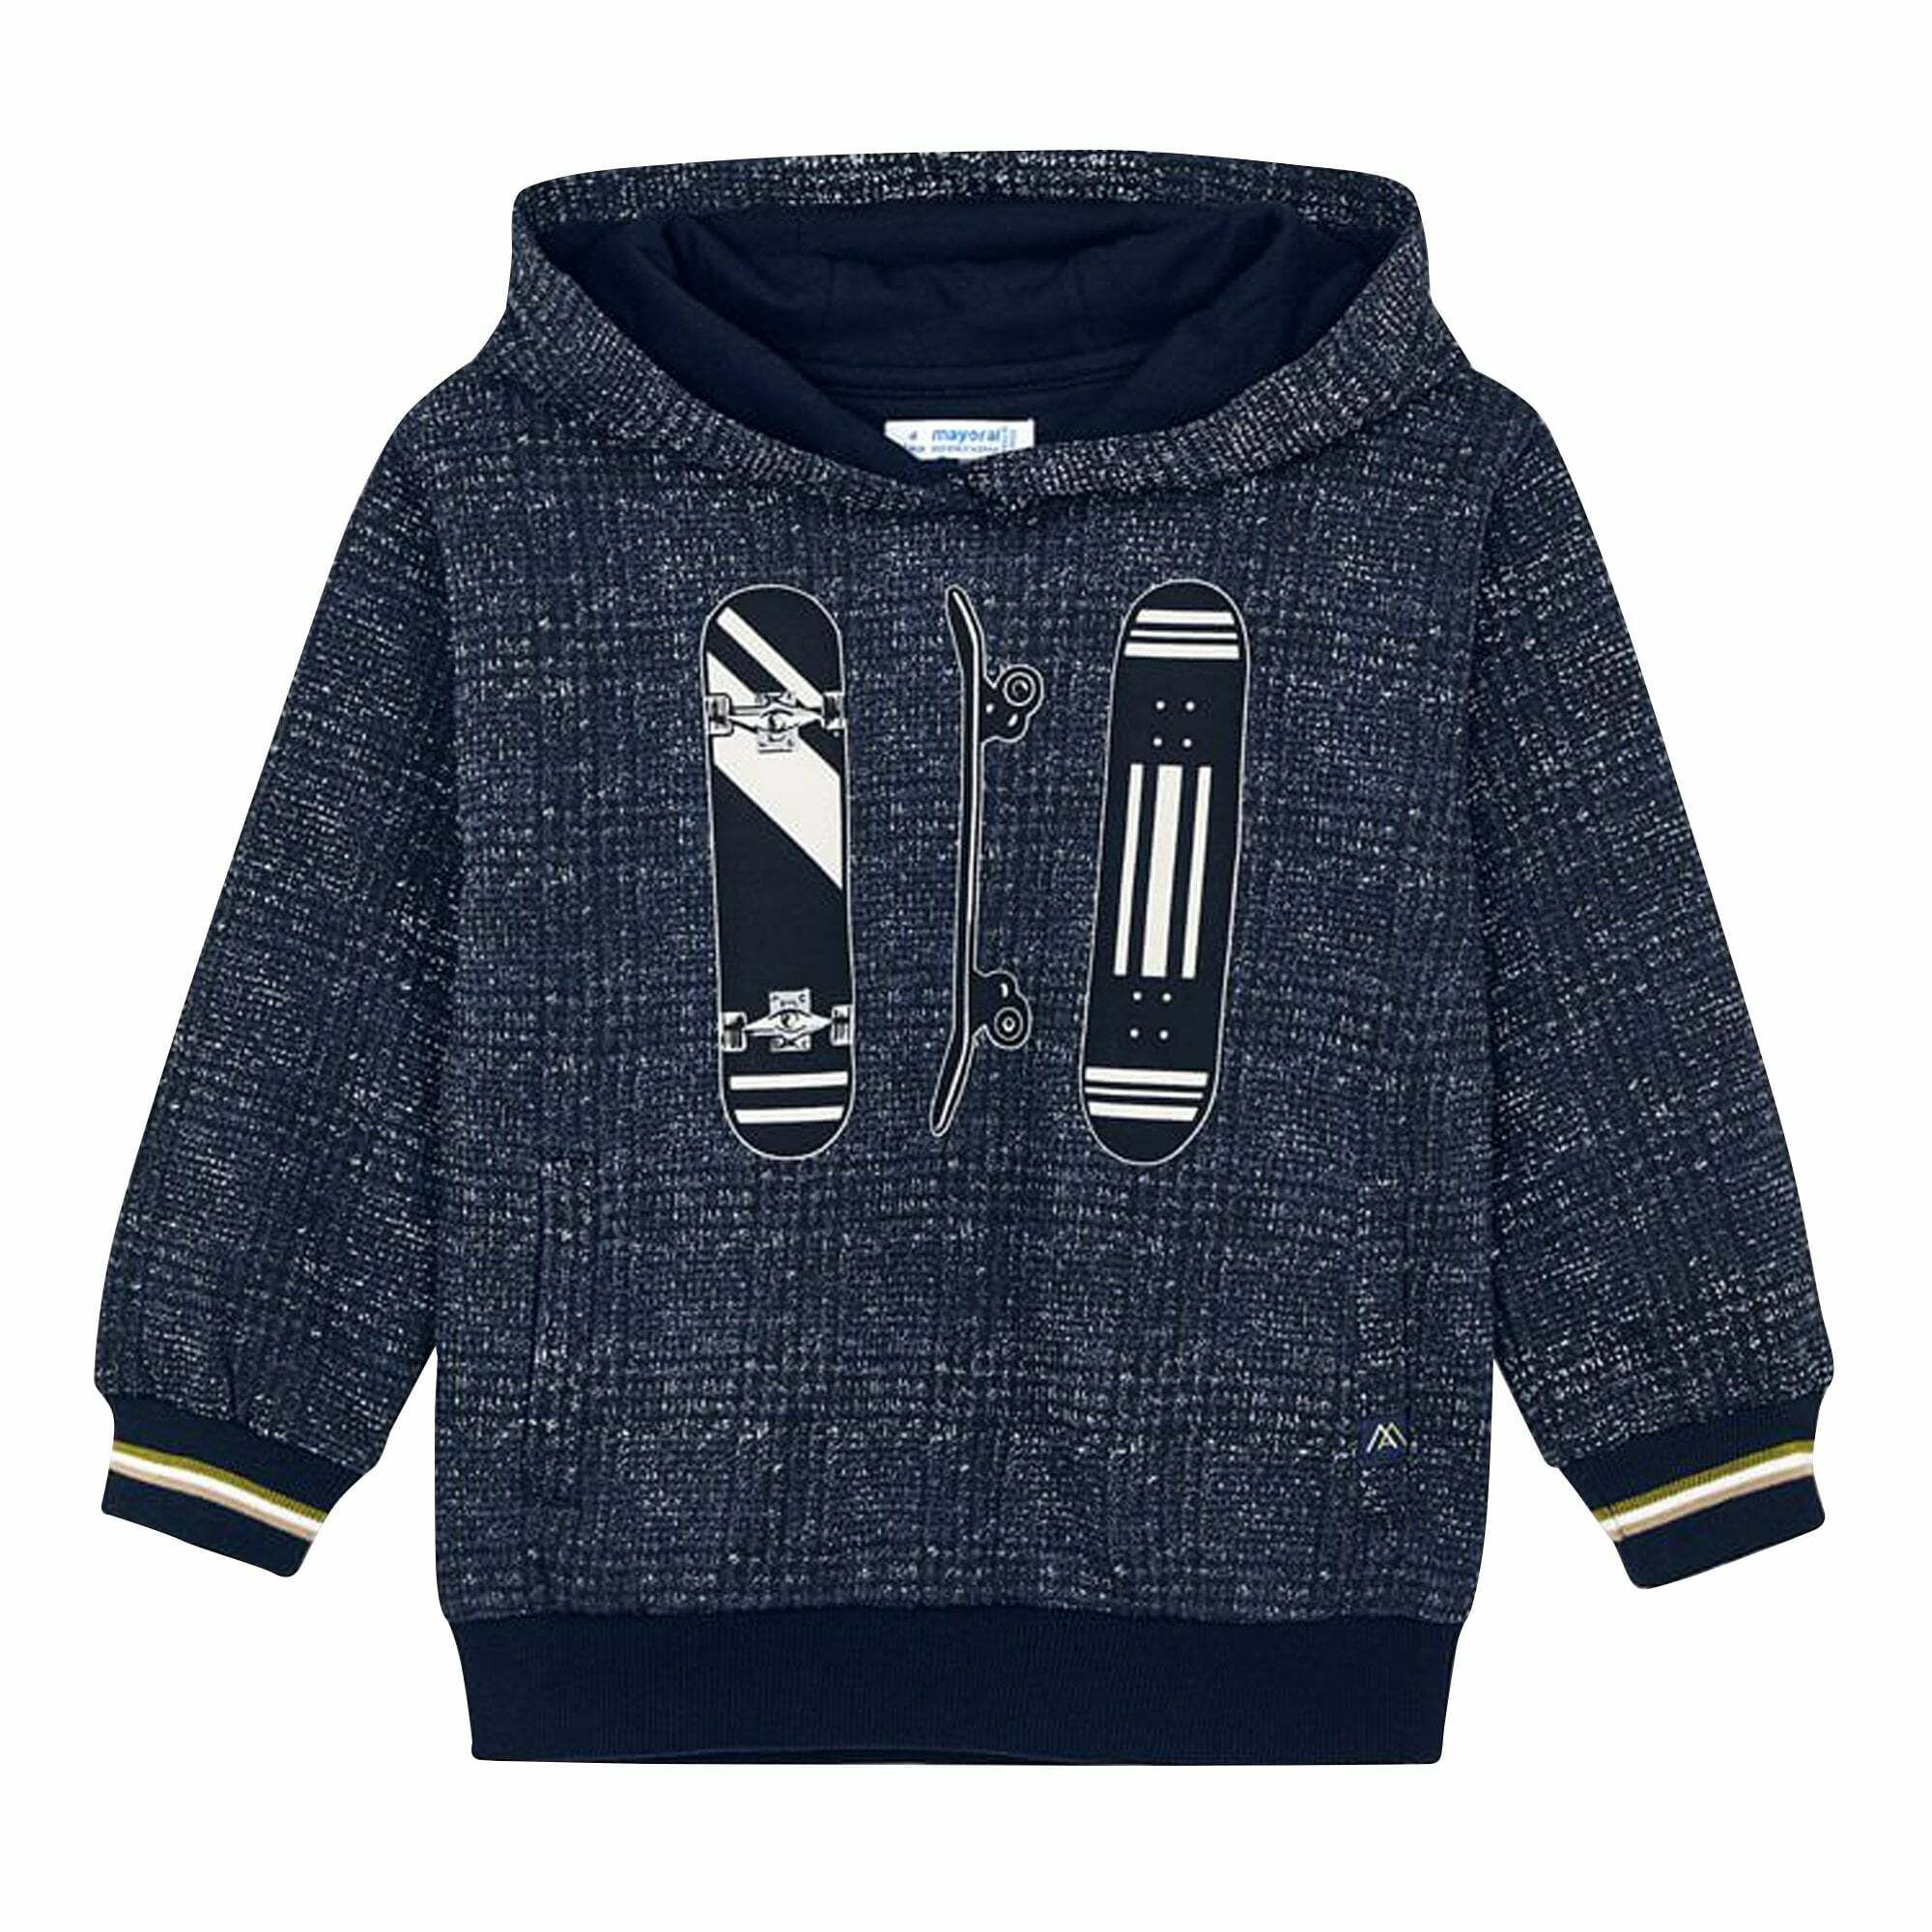 Tex sweatshirt KIDS FASHION Jumpers & Sweatshirts Print discount 92% Navy Blue 3Y 